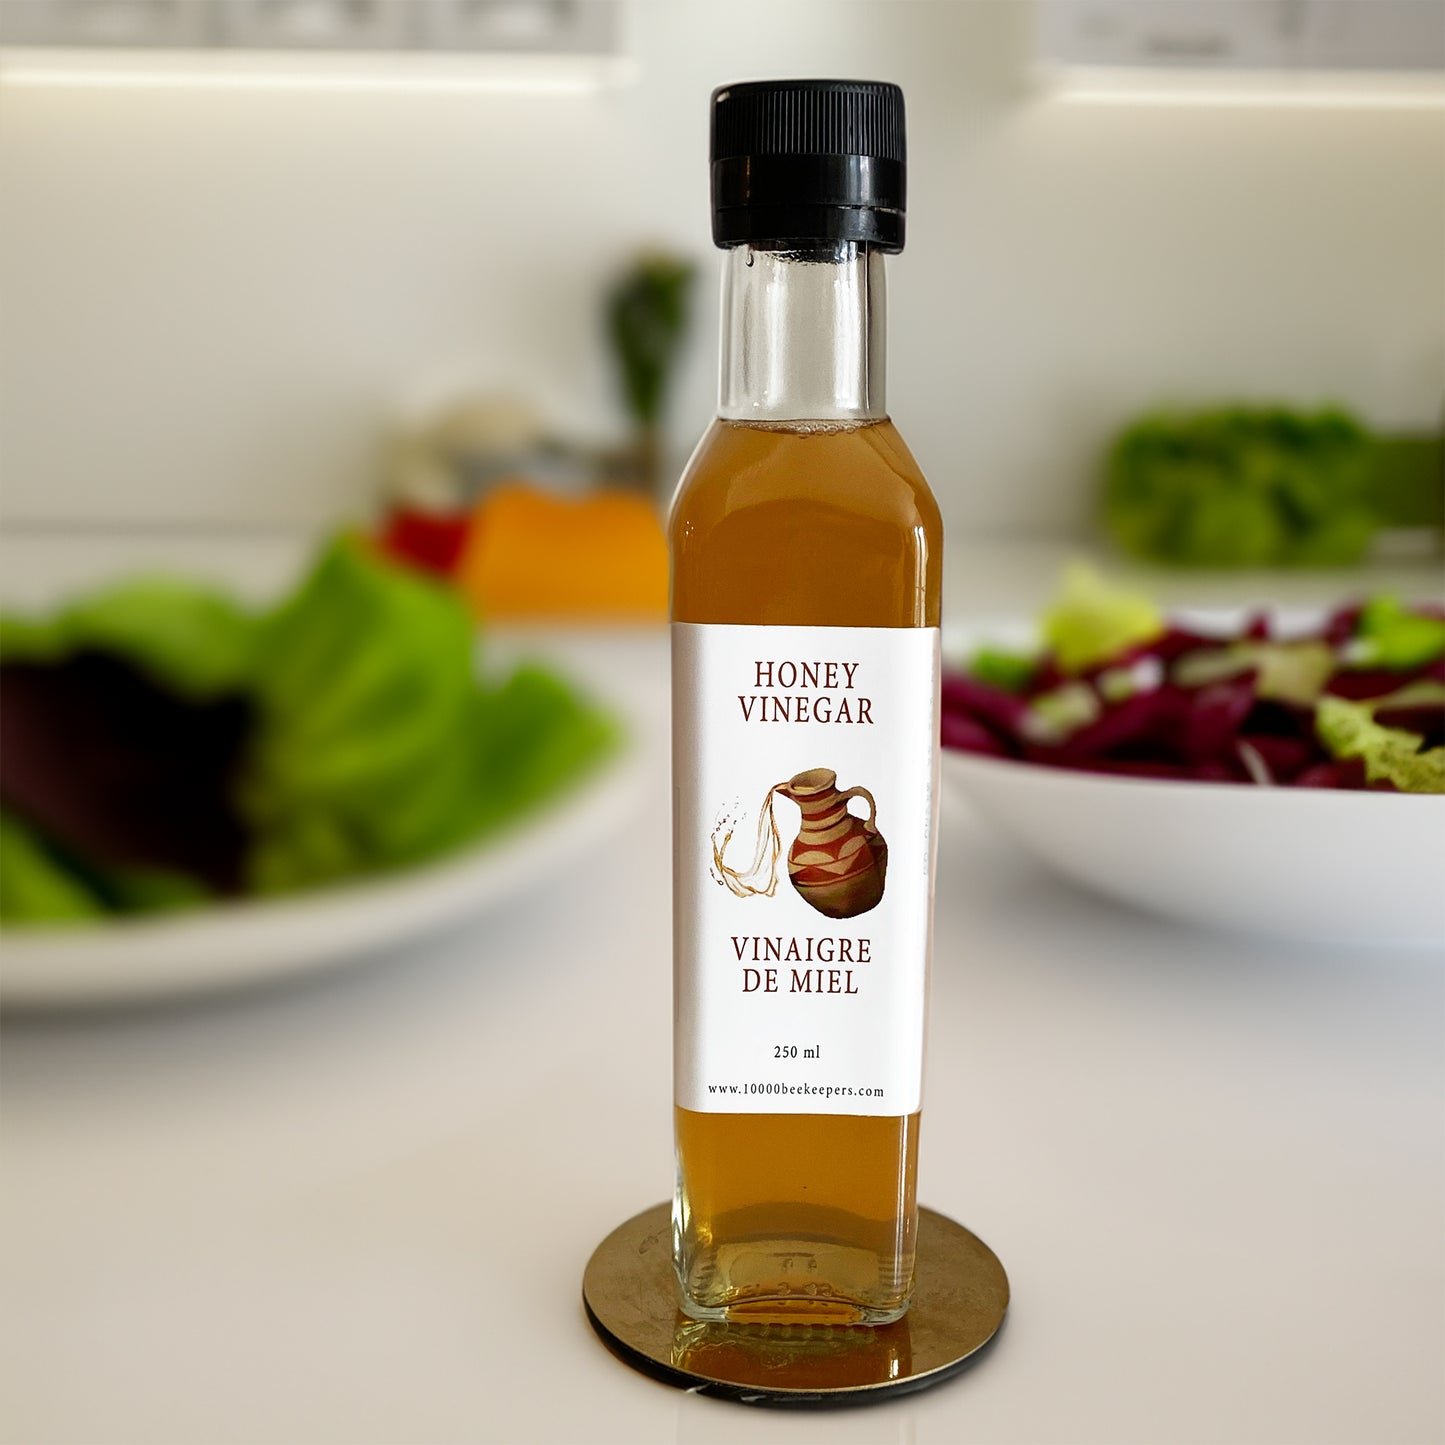 Honey Vinegar makes for a healthy salad dressing